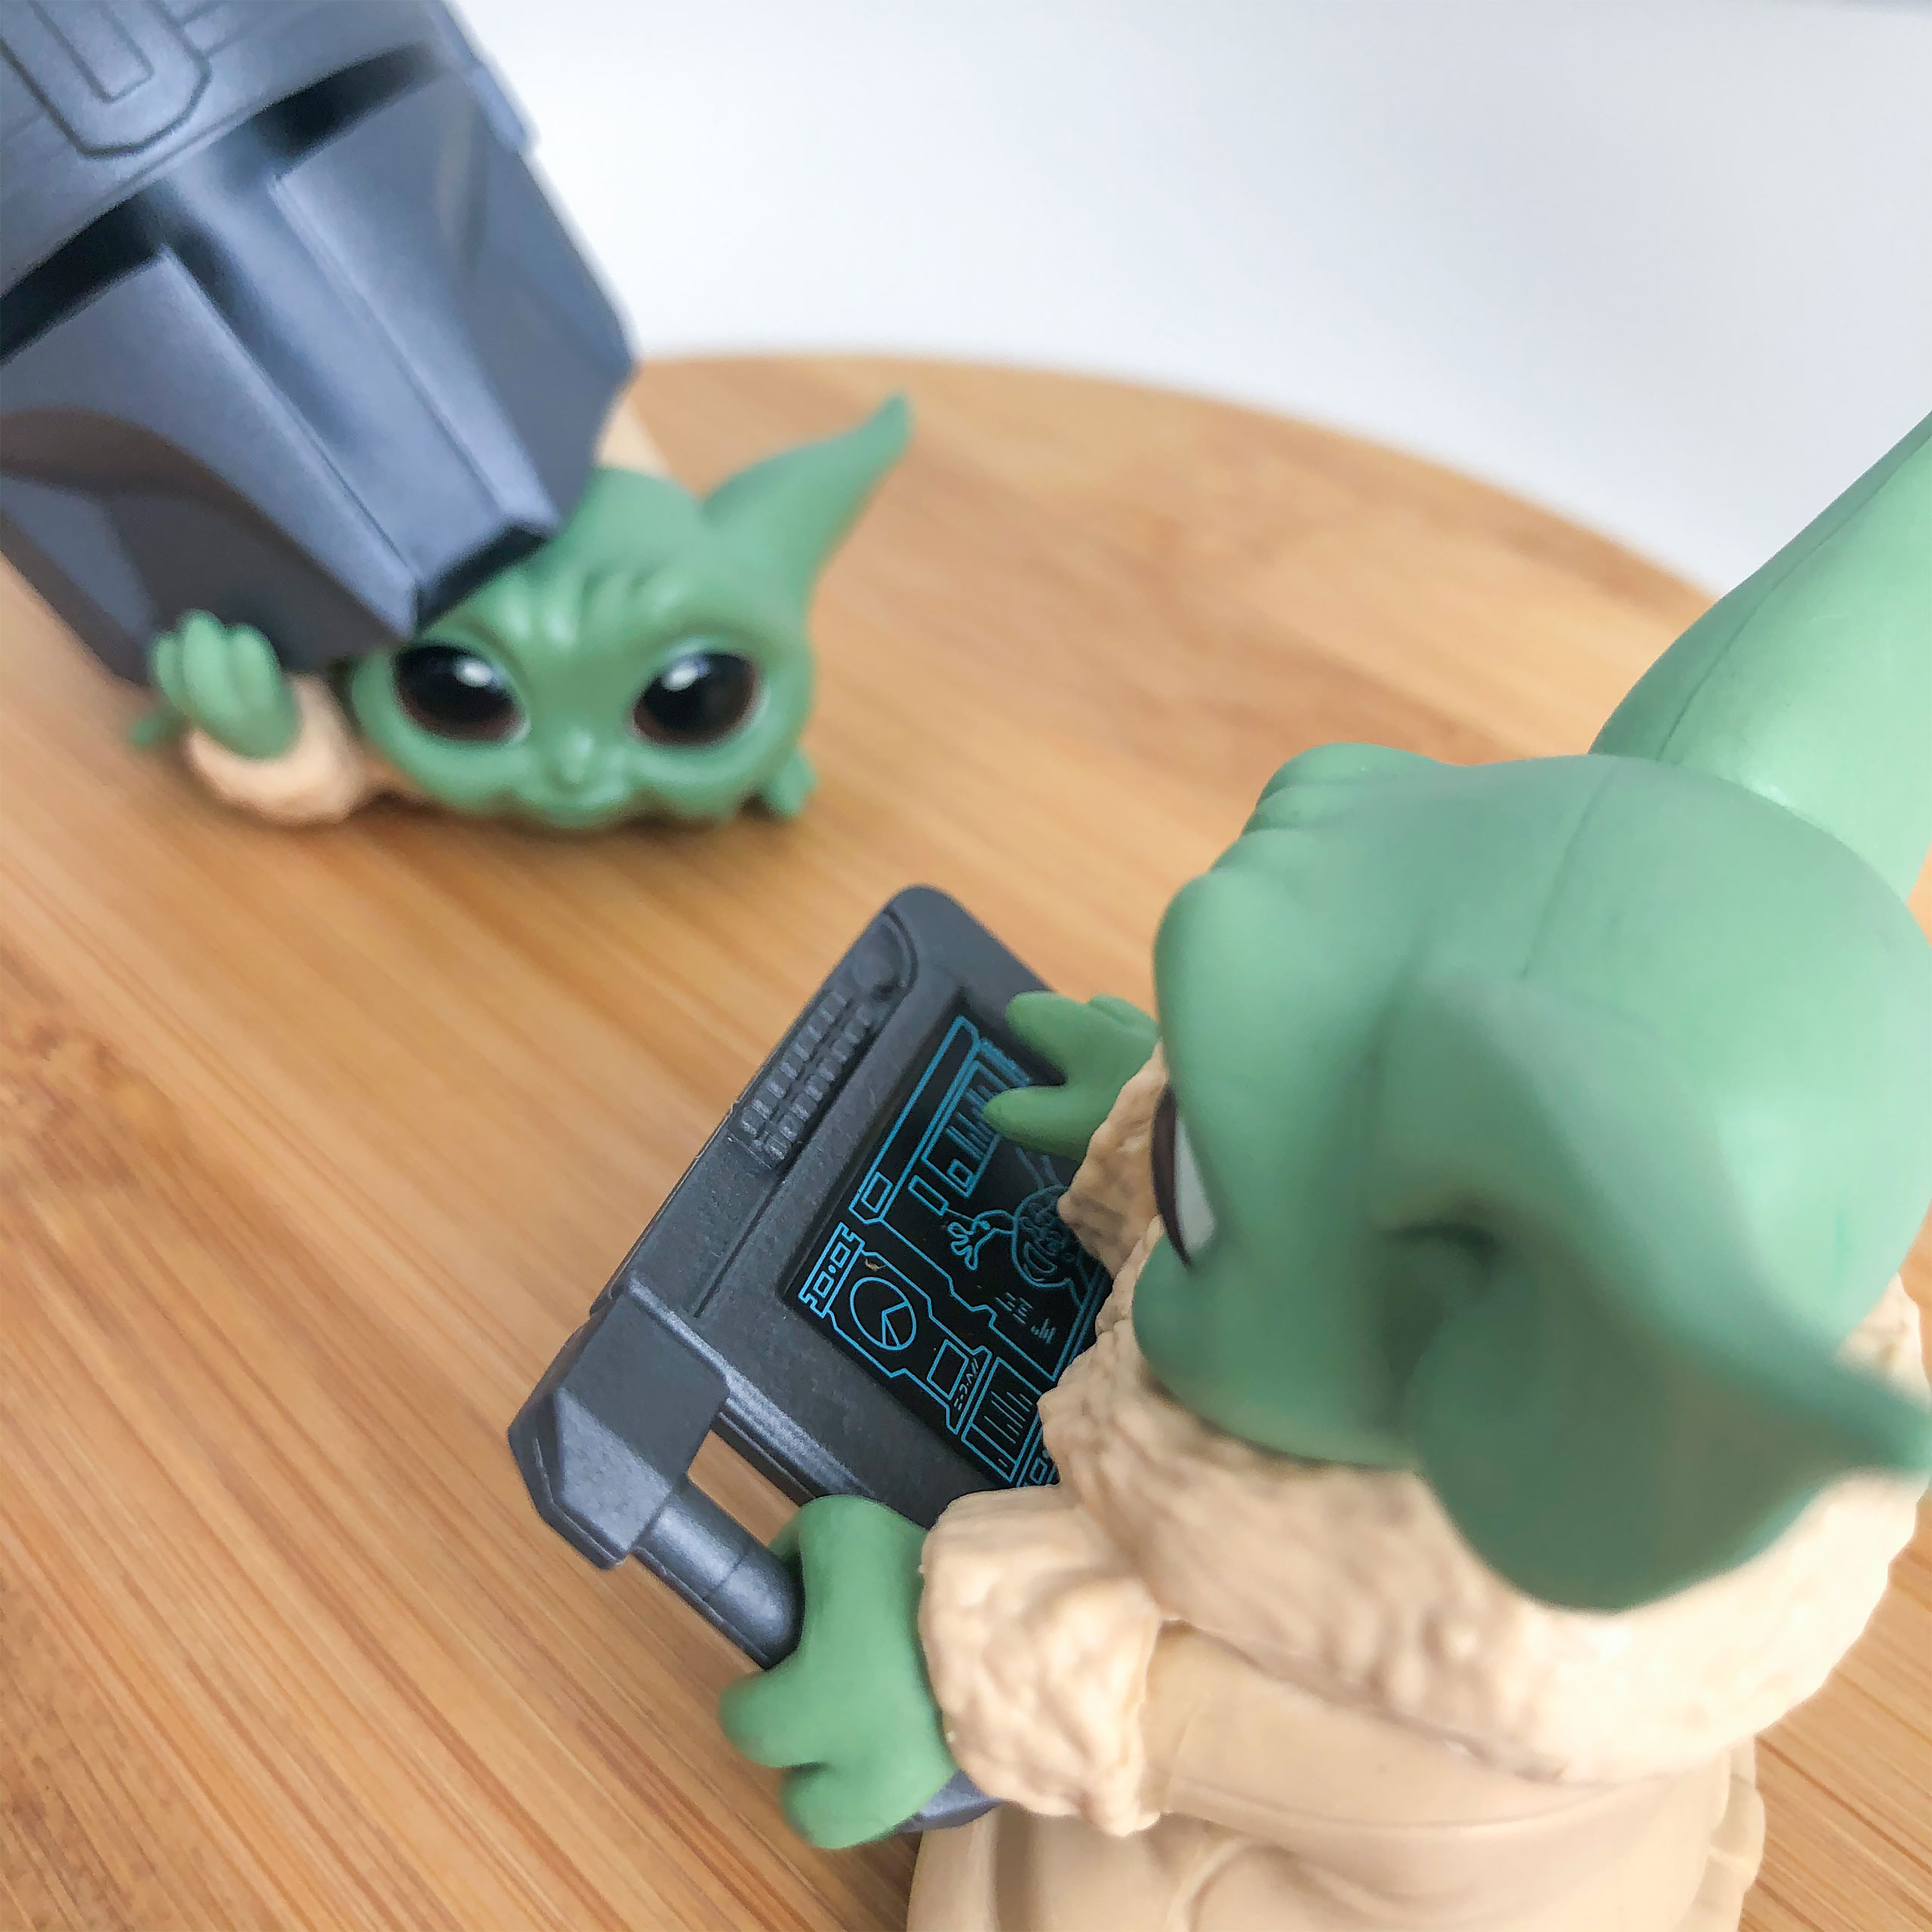 Grogu mit Helm und Tablet Mini-Figuren-Set - Star Wars The Mandalorian